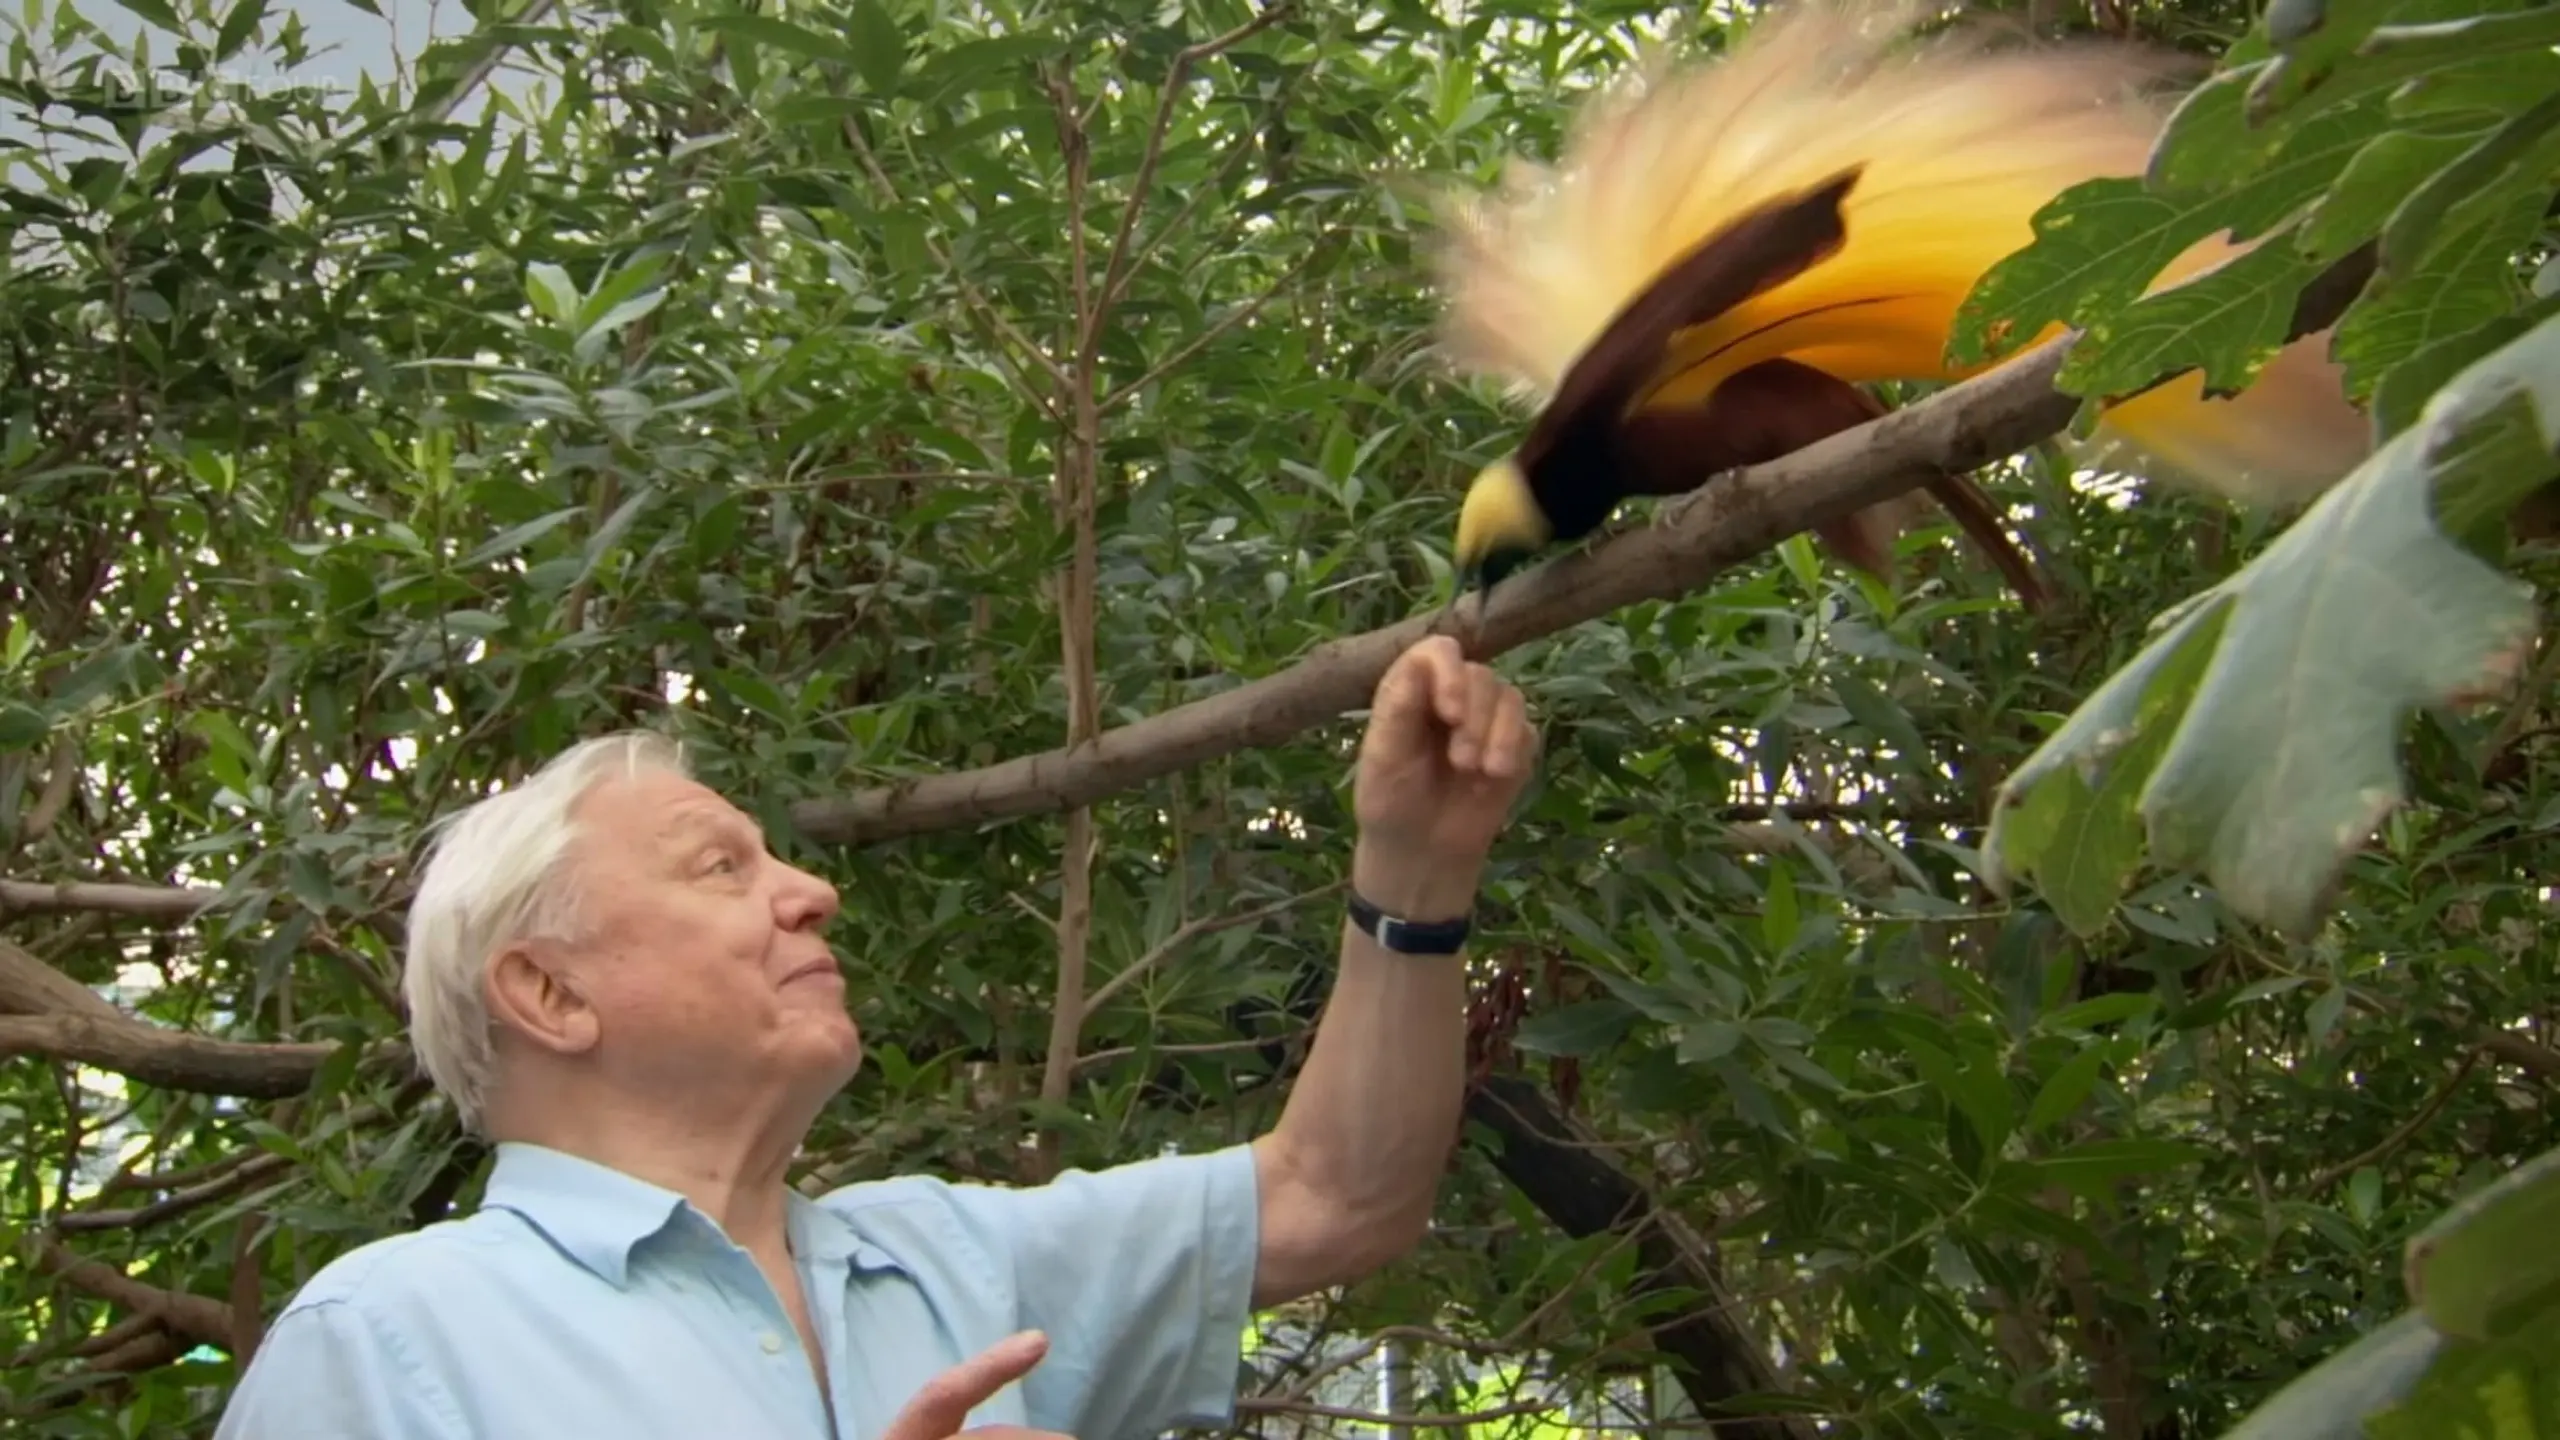 Attenborough's Paradise Birds